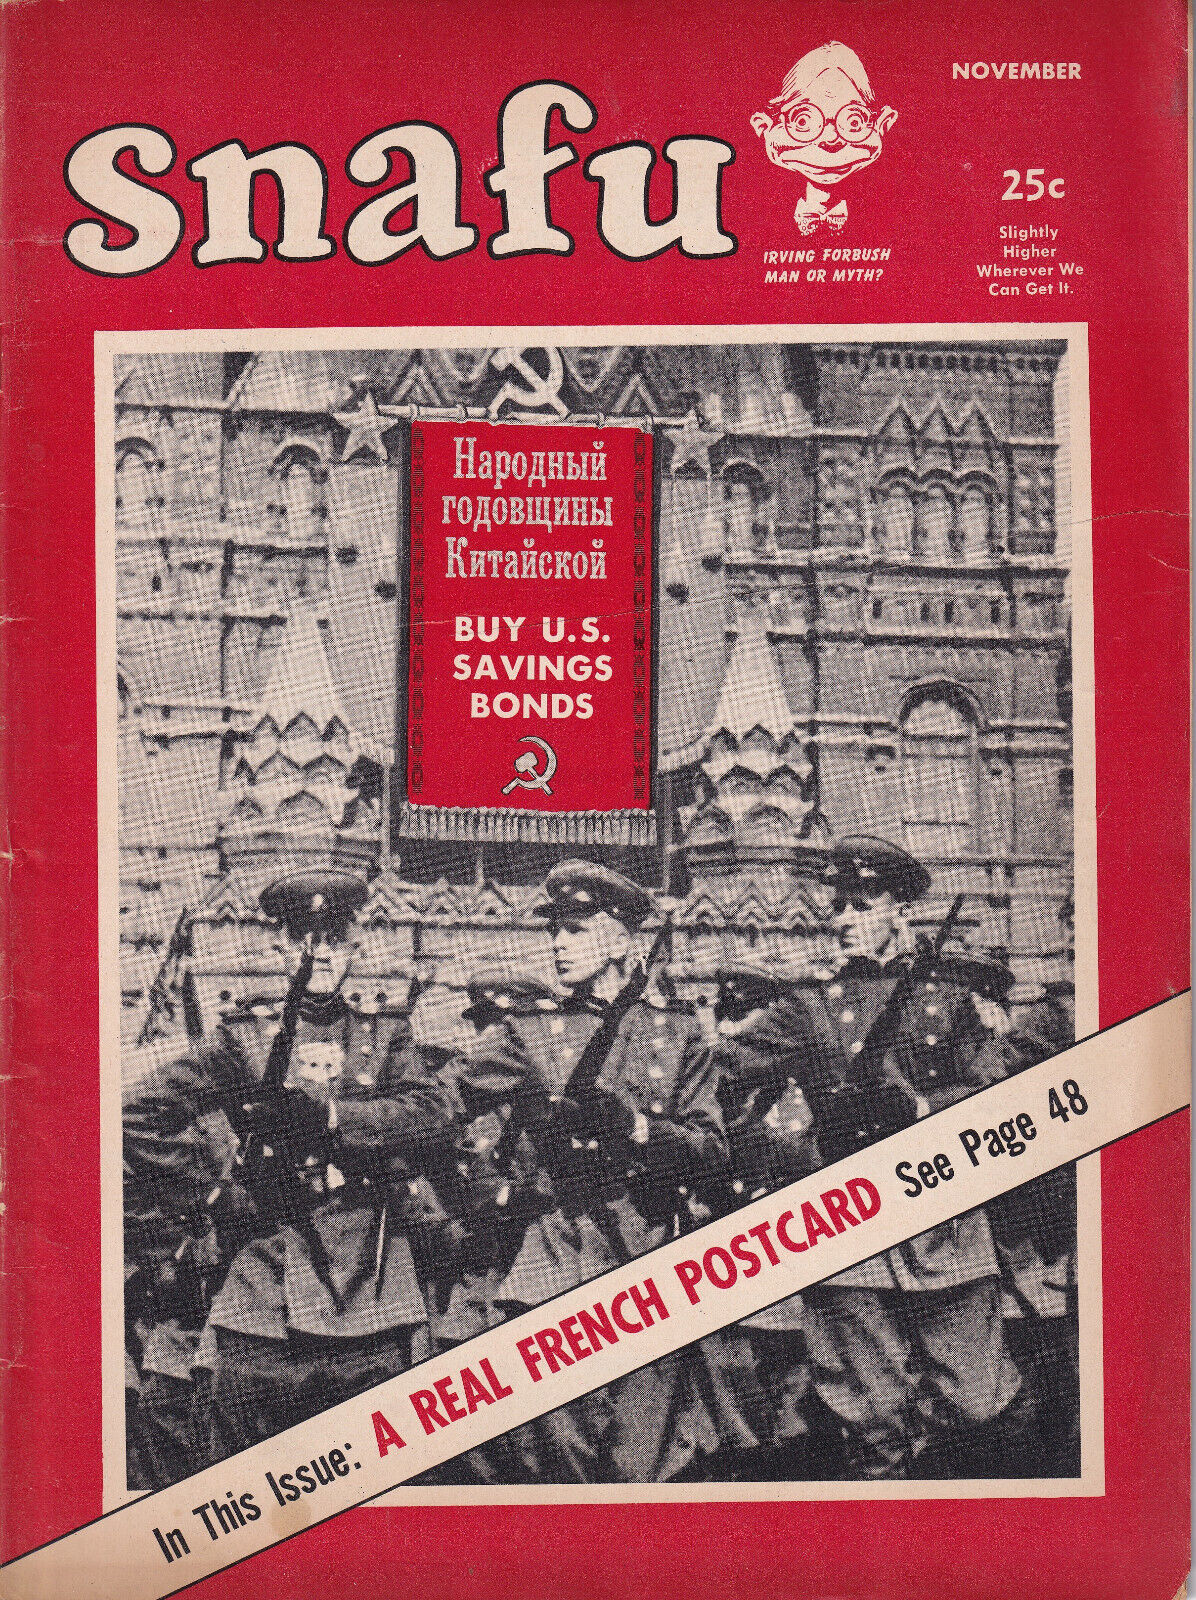 Snafu Volume 1 Issue 1 November 1955 Red Circle Magazine Publisher